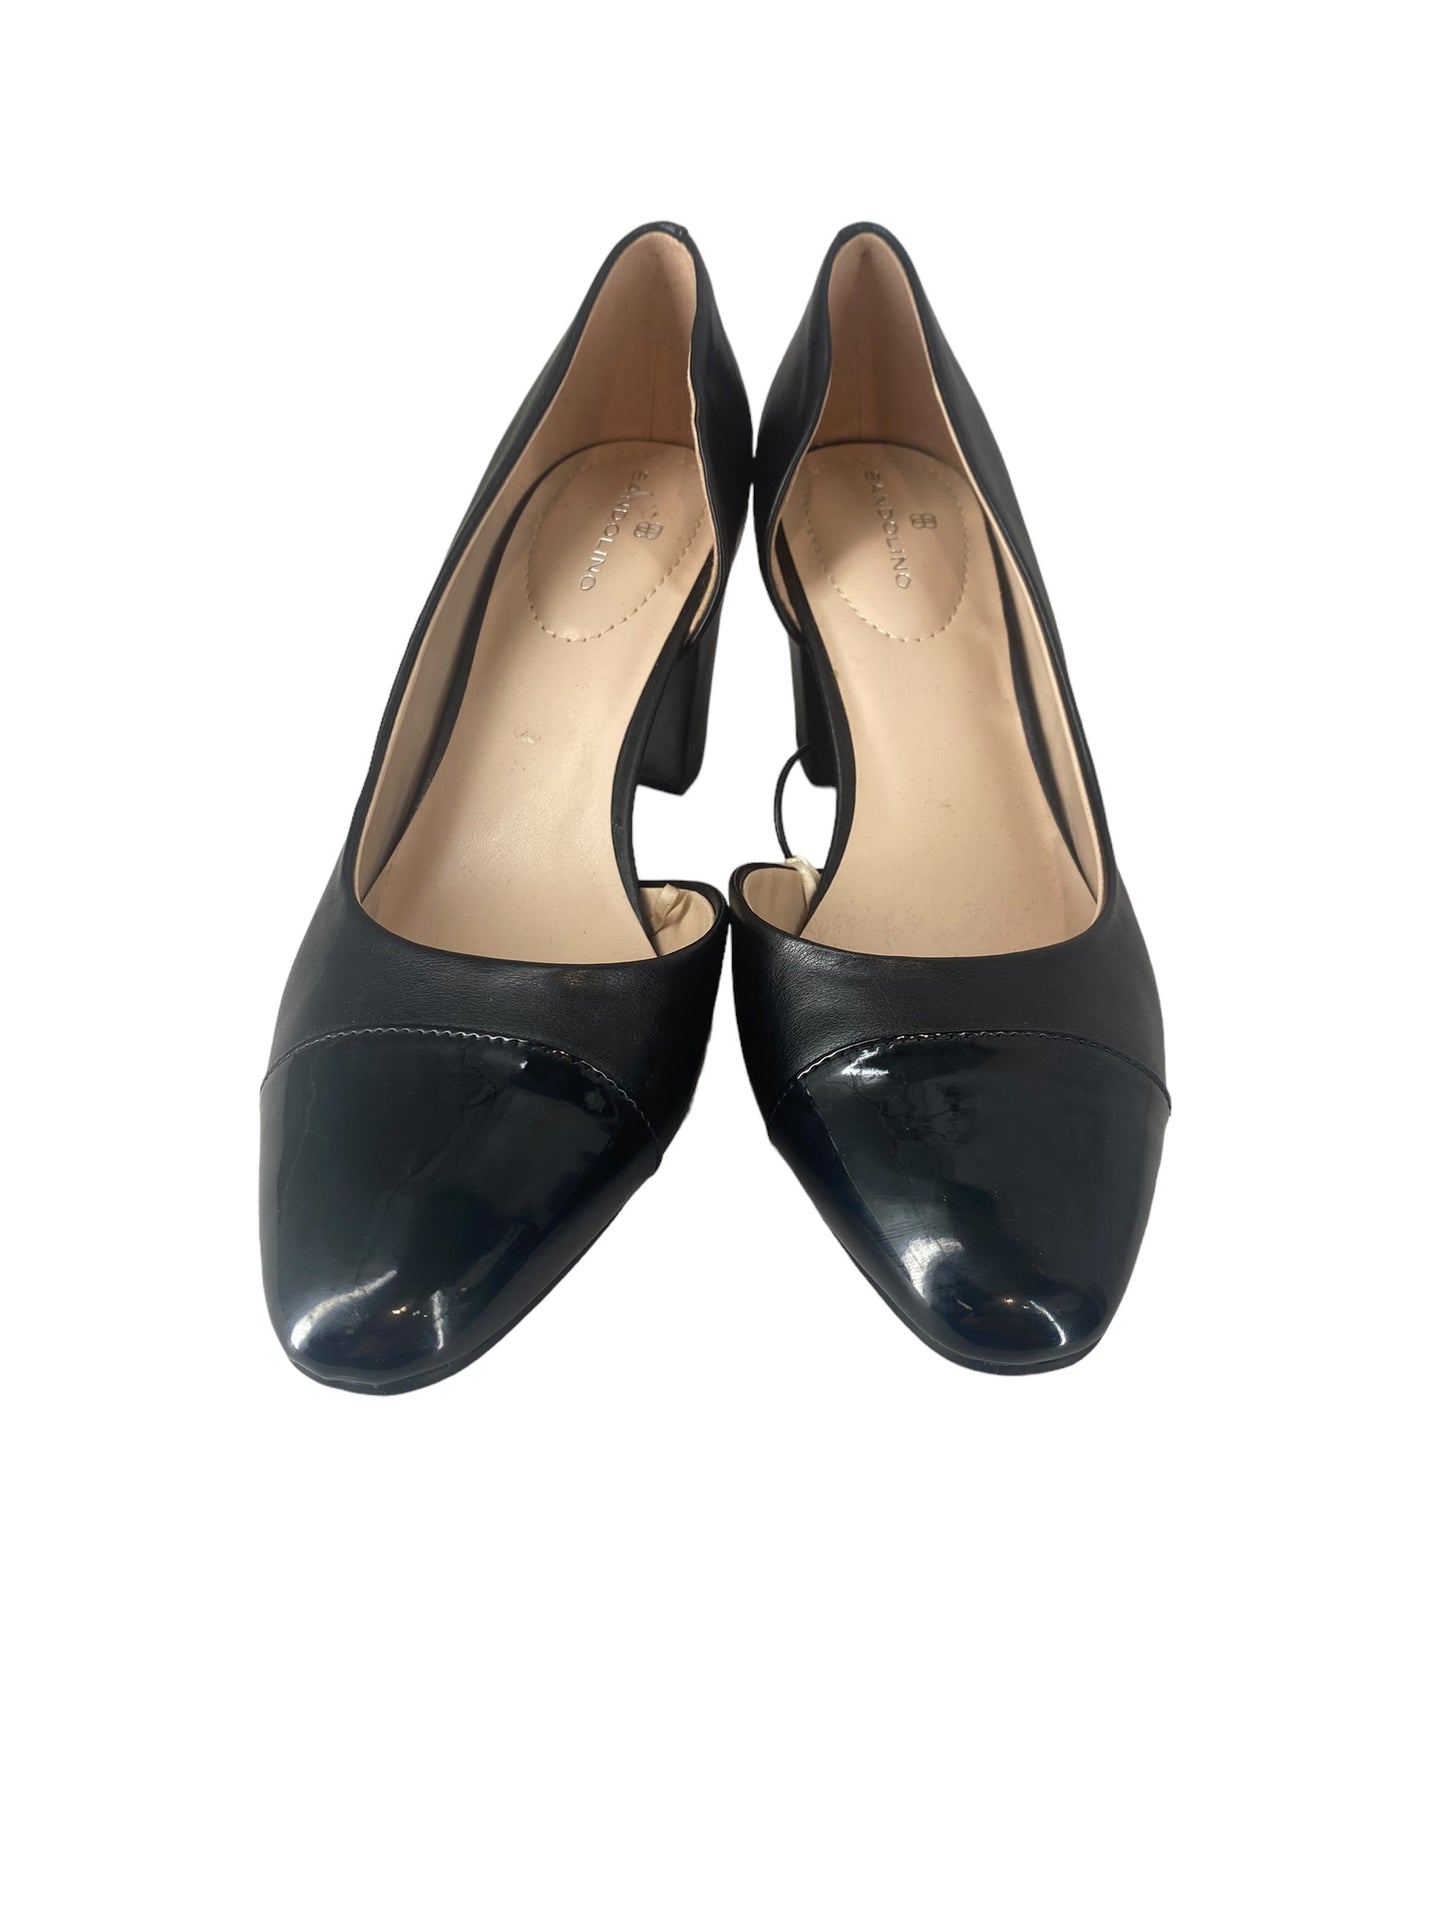 Black Shoes Heels Block Bandolino, Size 8.5